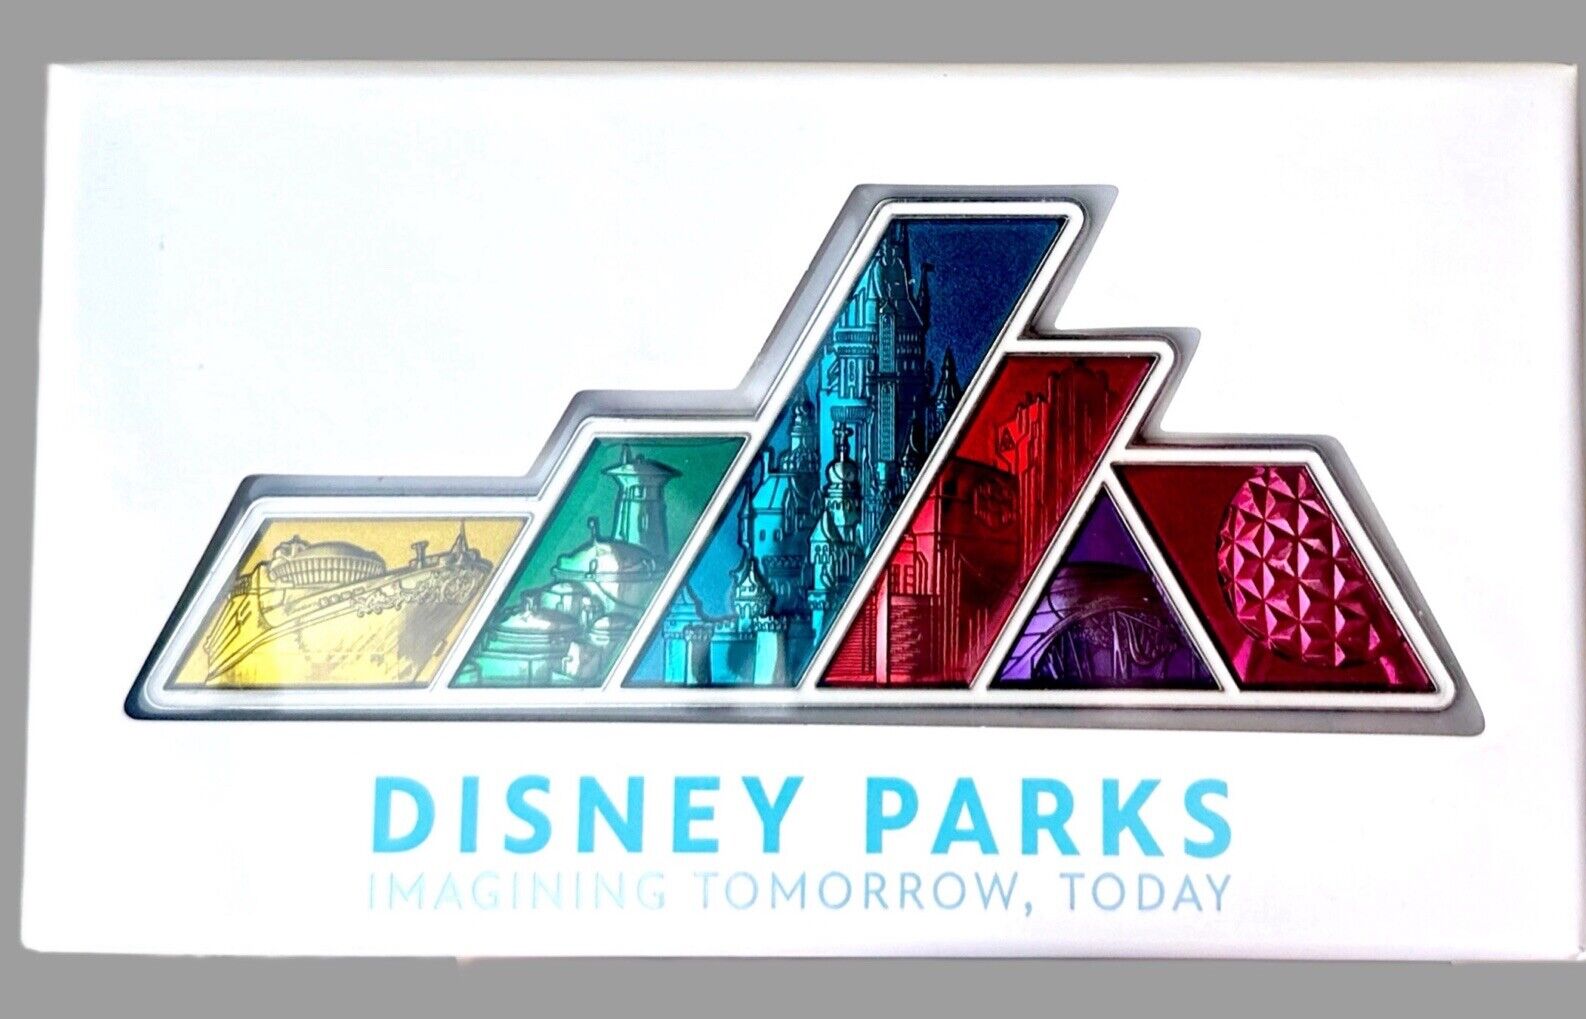 Disney Pin D23 WDI Disney Parks Imagining Tomorrow Today LE 300  